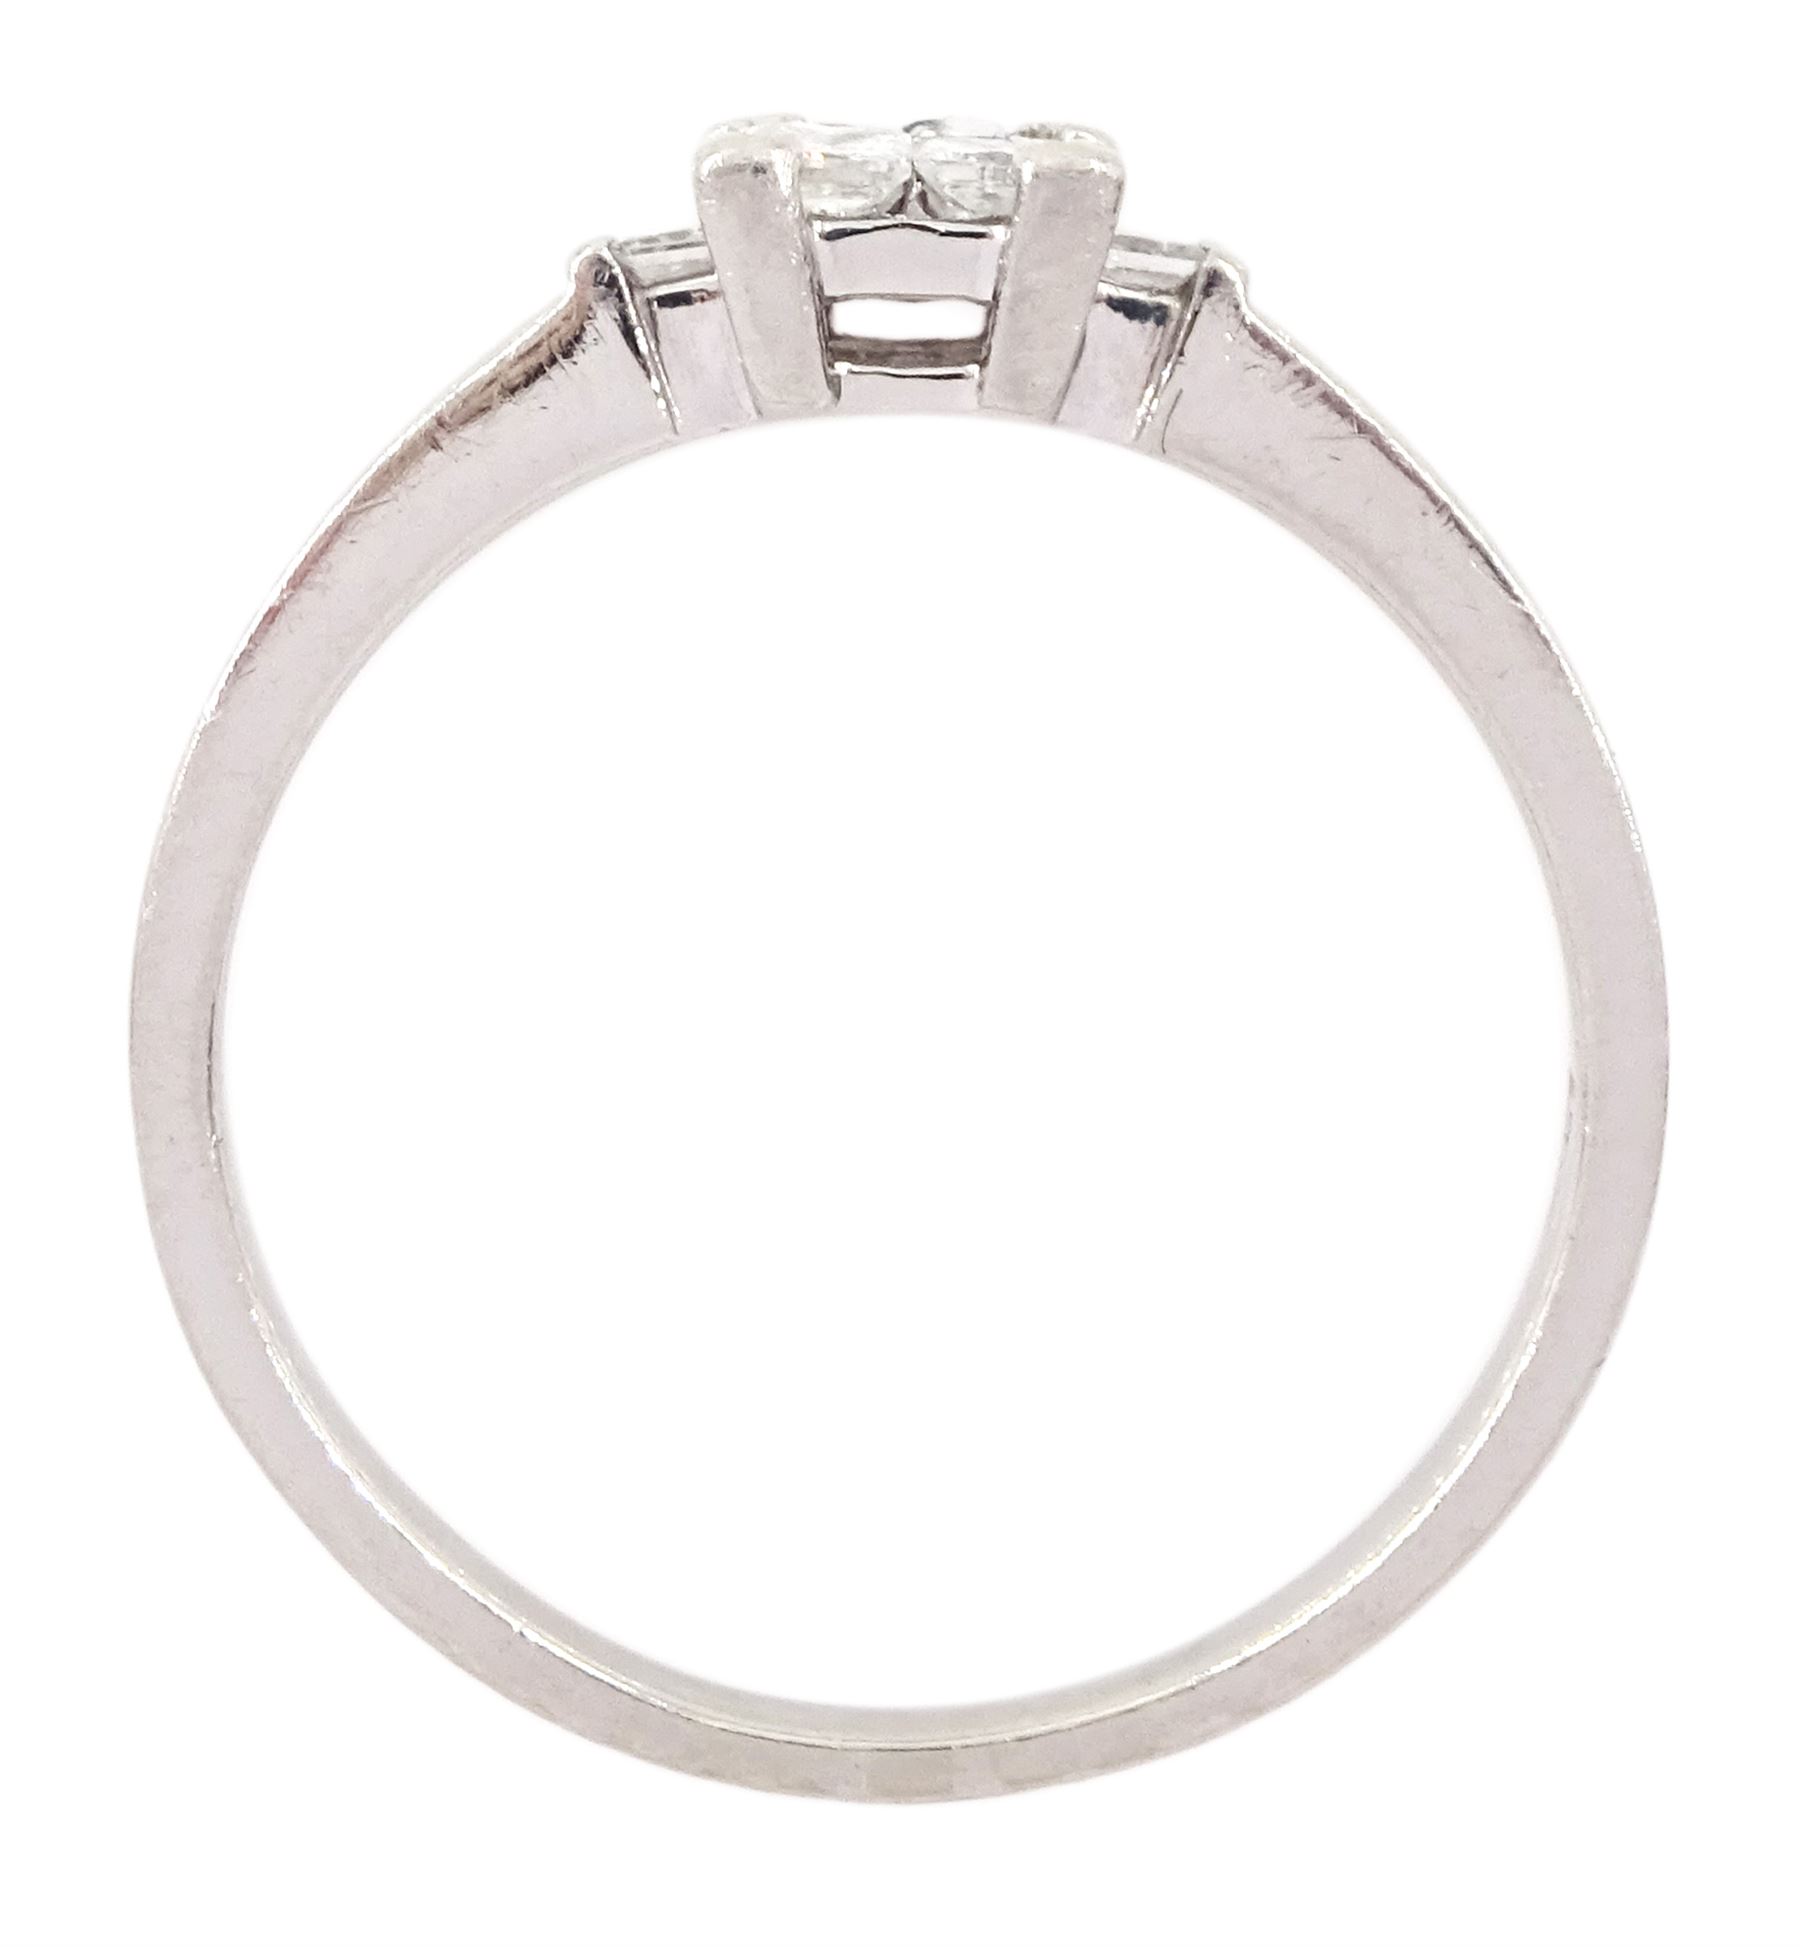 Platinum four stone pave set princess cut diamond cluster ring - Image 4 of 4